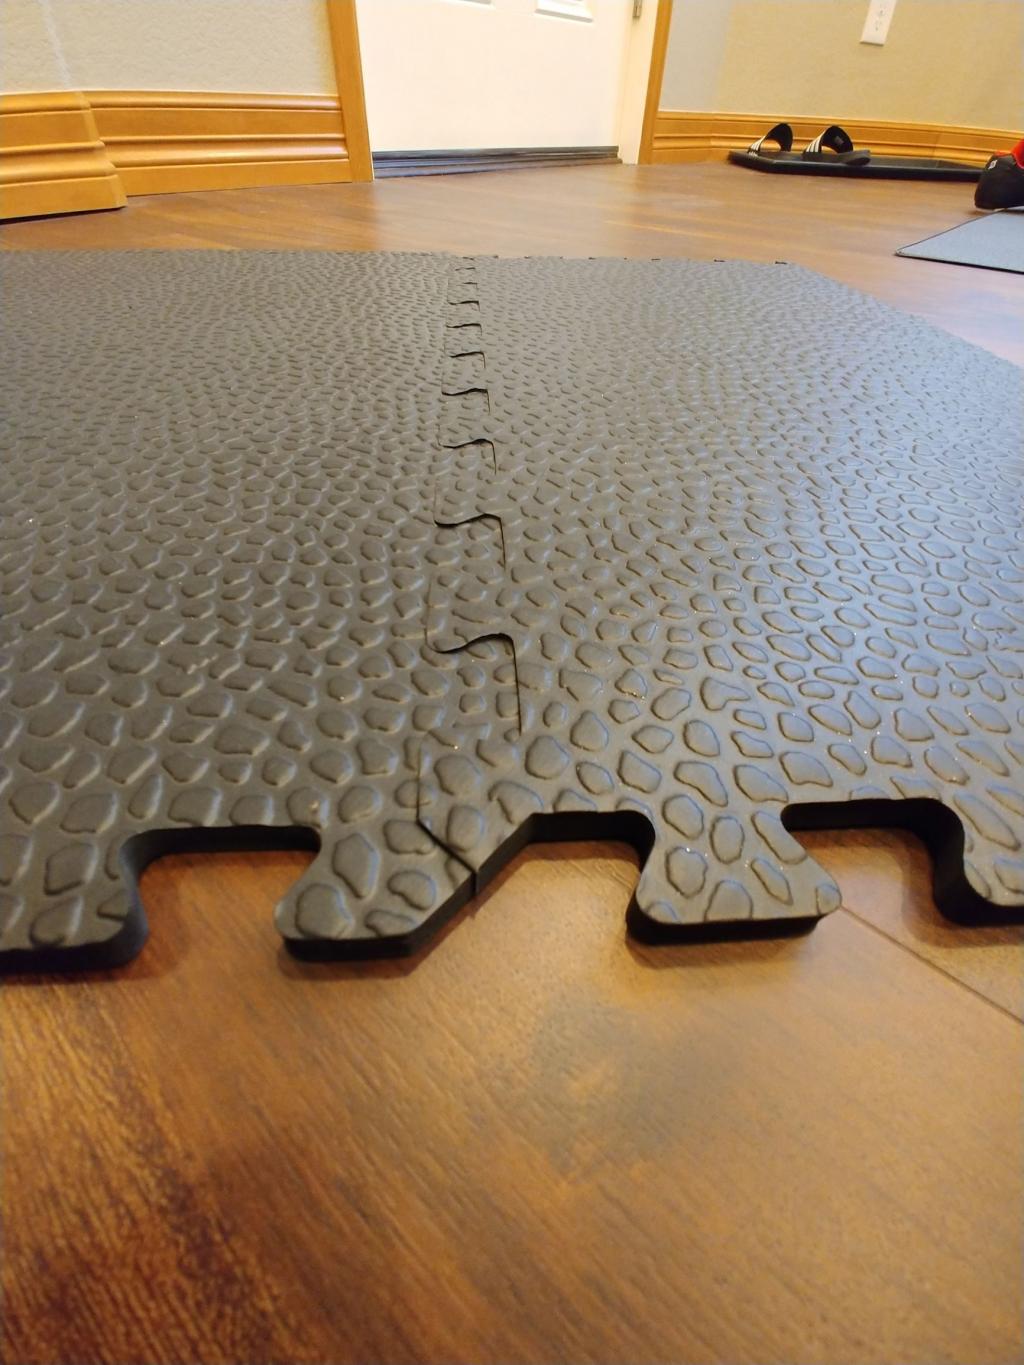 Epic Fitness Foam Gym Flooring Interlocking Tile Mat